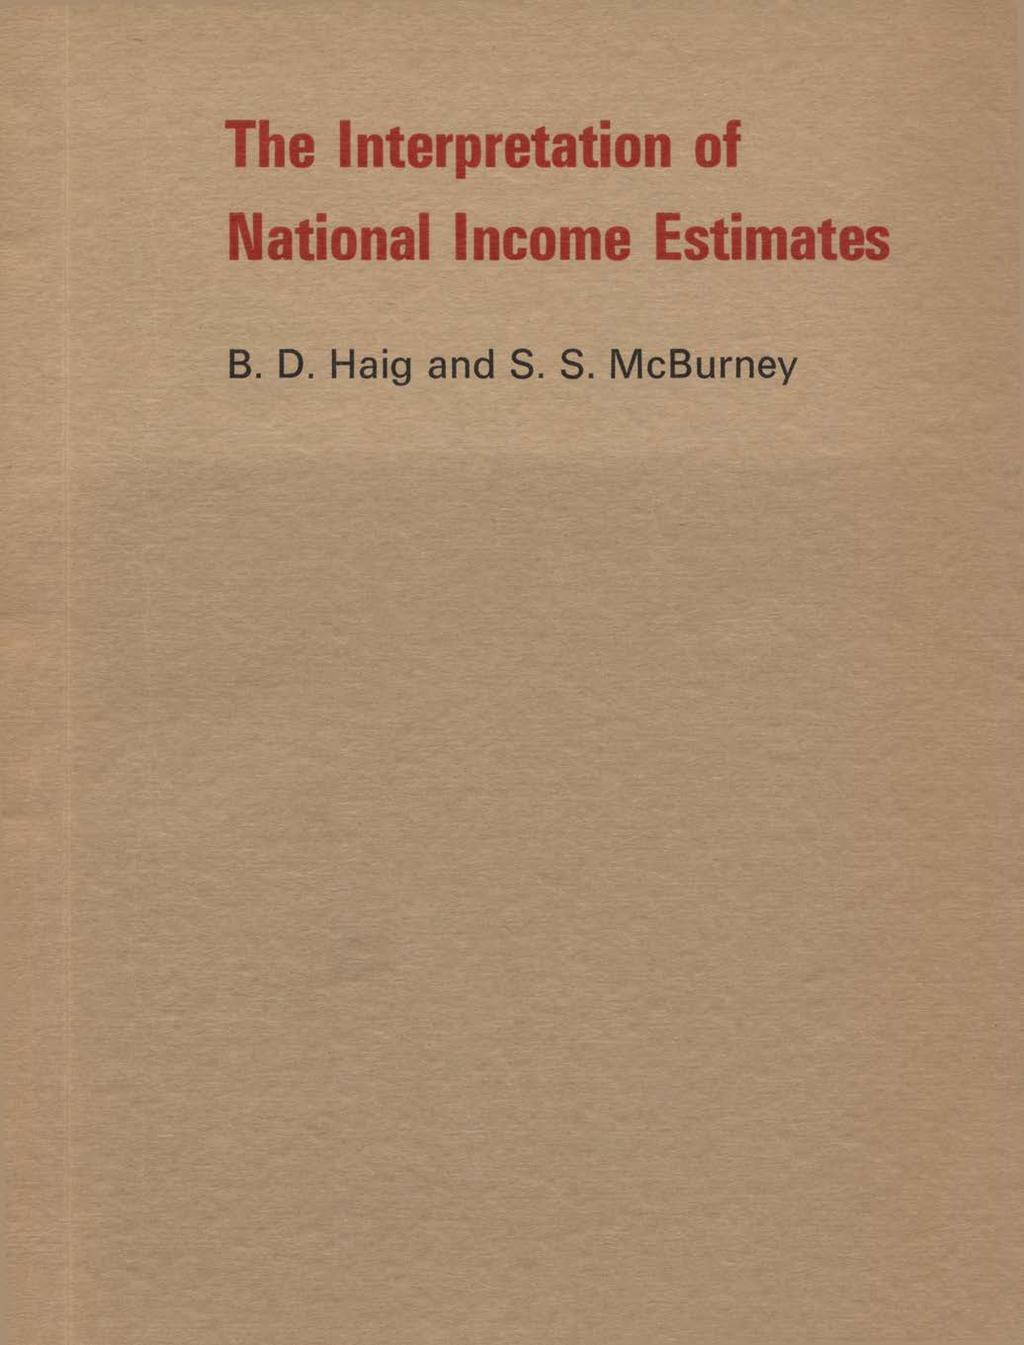 The Interpretation of National Income